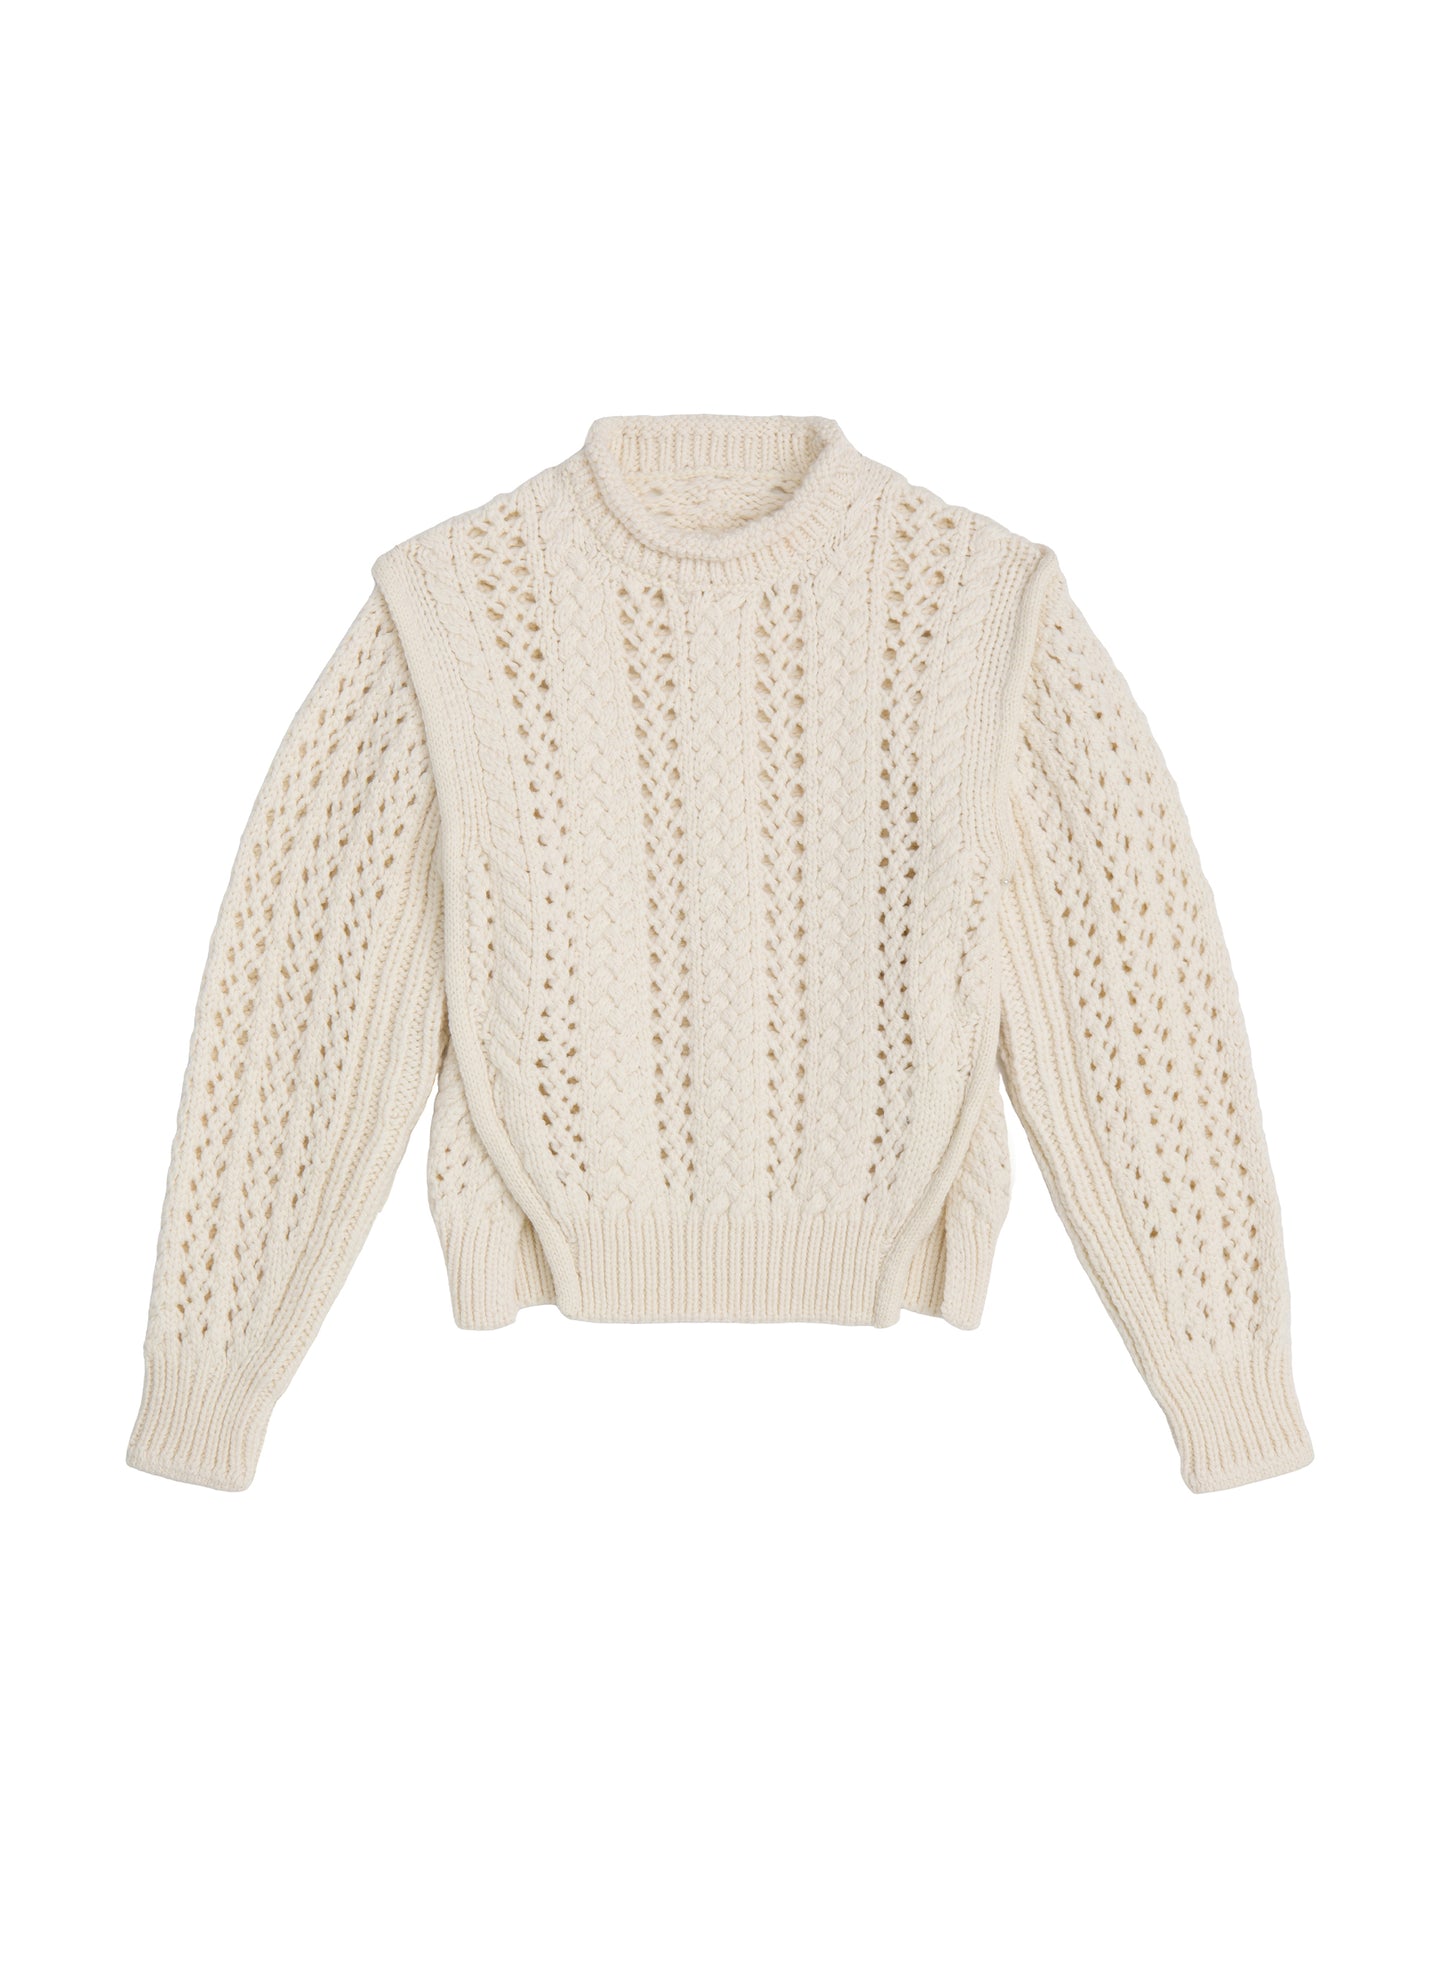 flatlay of cream open knit sweater